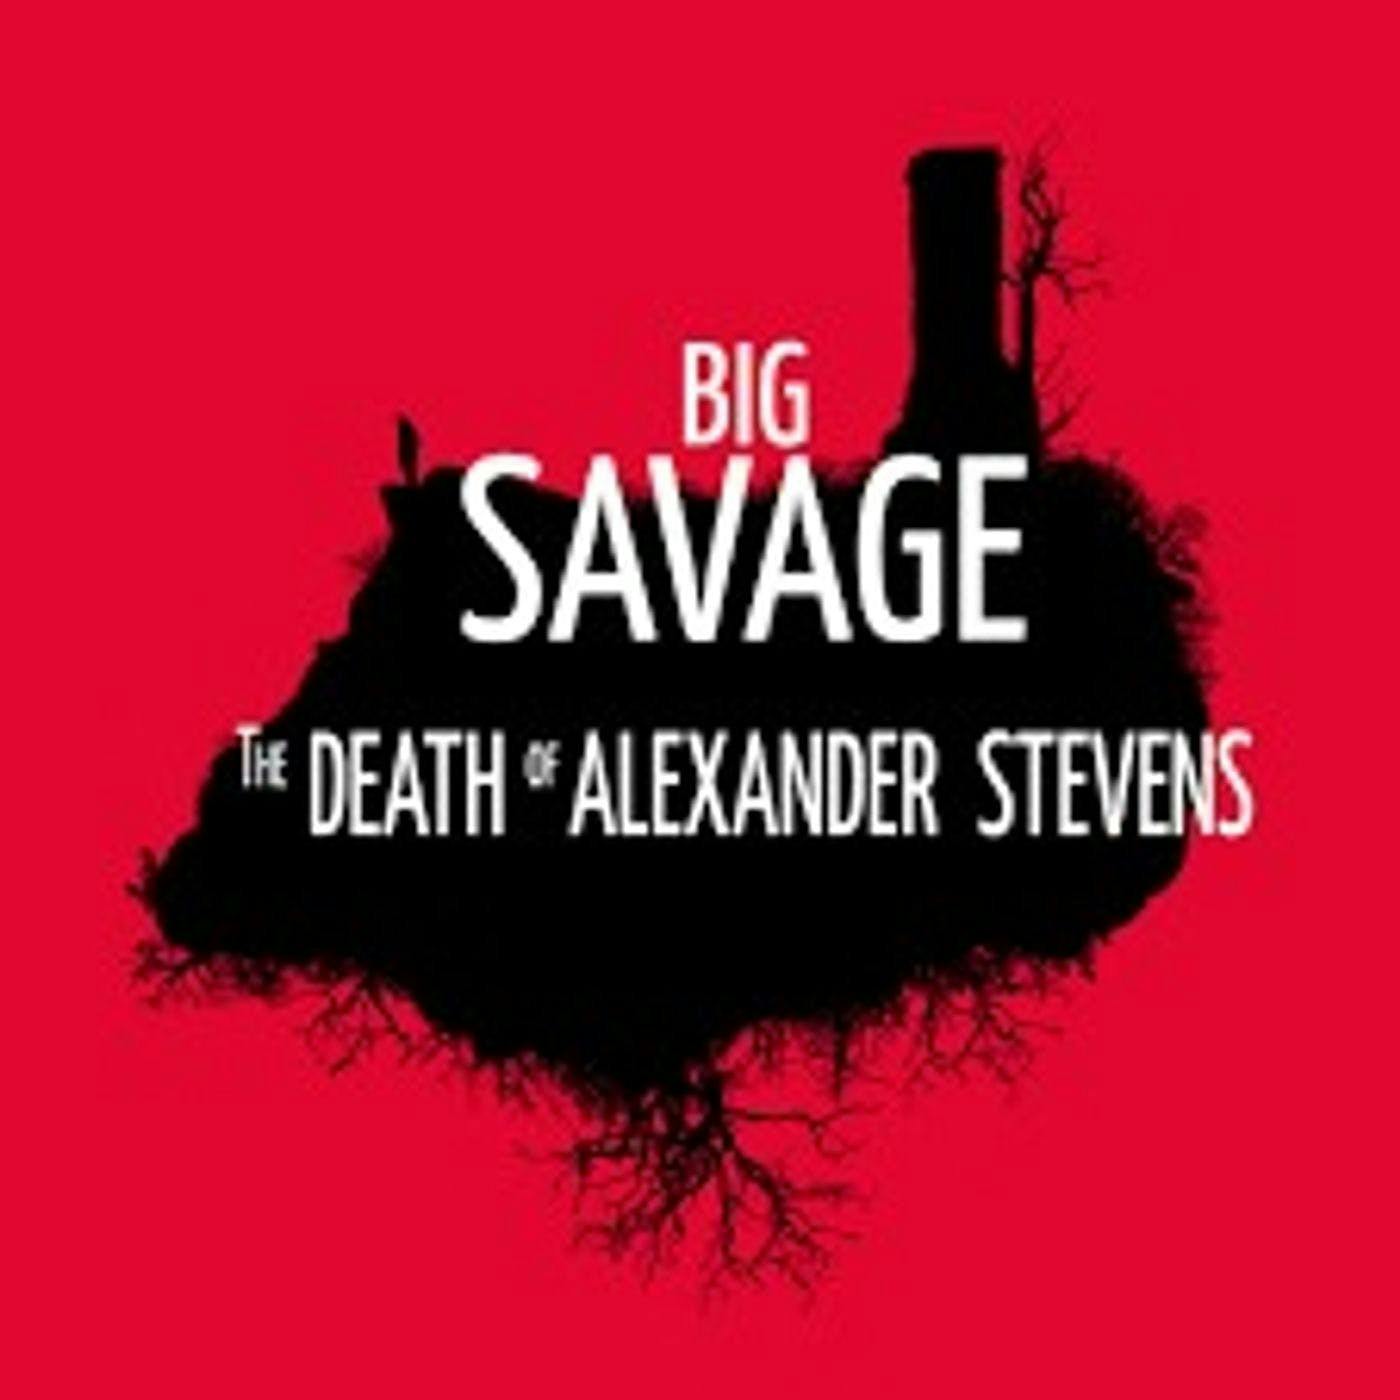 Folie à Deux? | Big Savage: The Death of Alexander Stevens